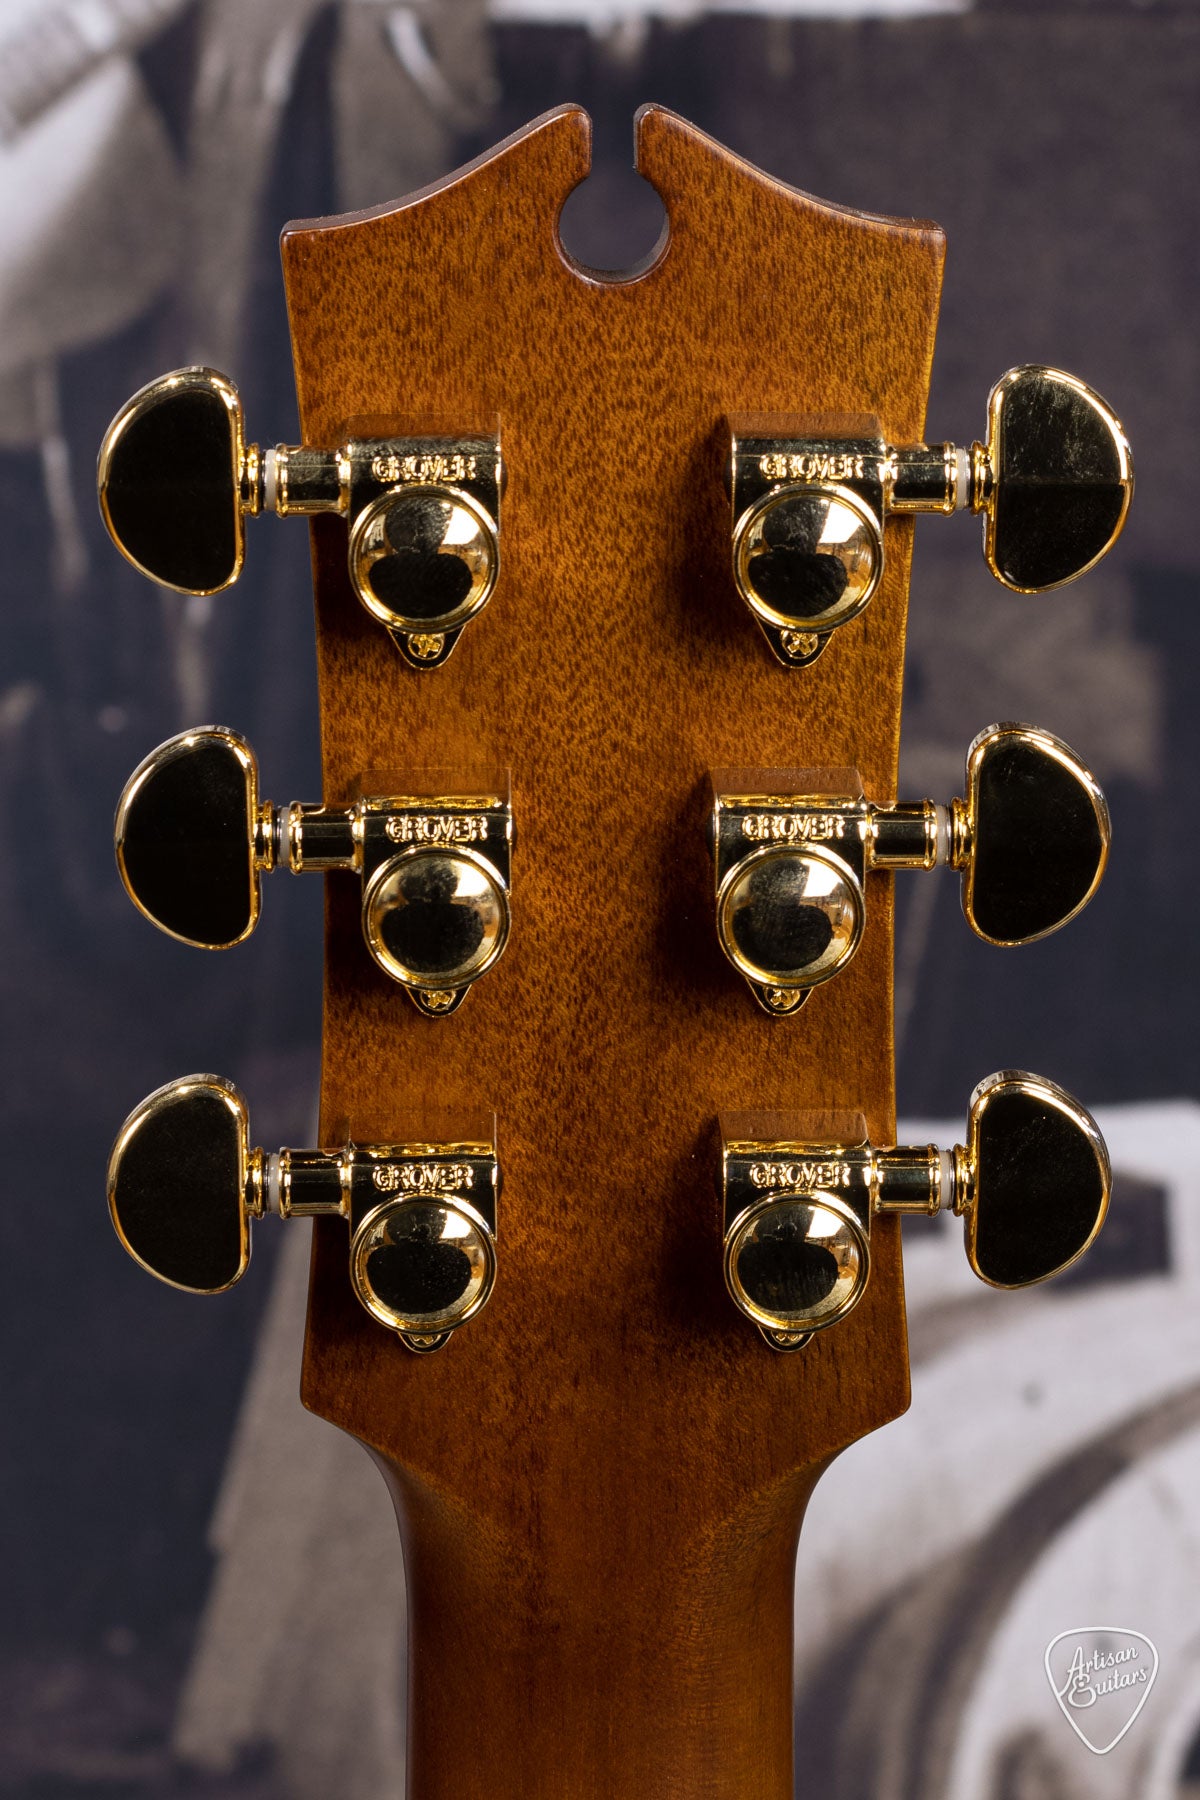 Maton Guitars EBG-808C Nashville Cutaway - 16357